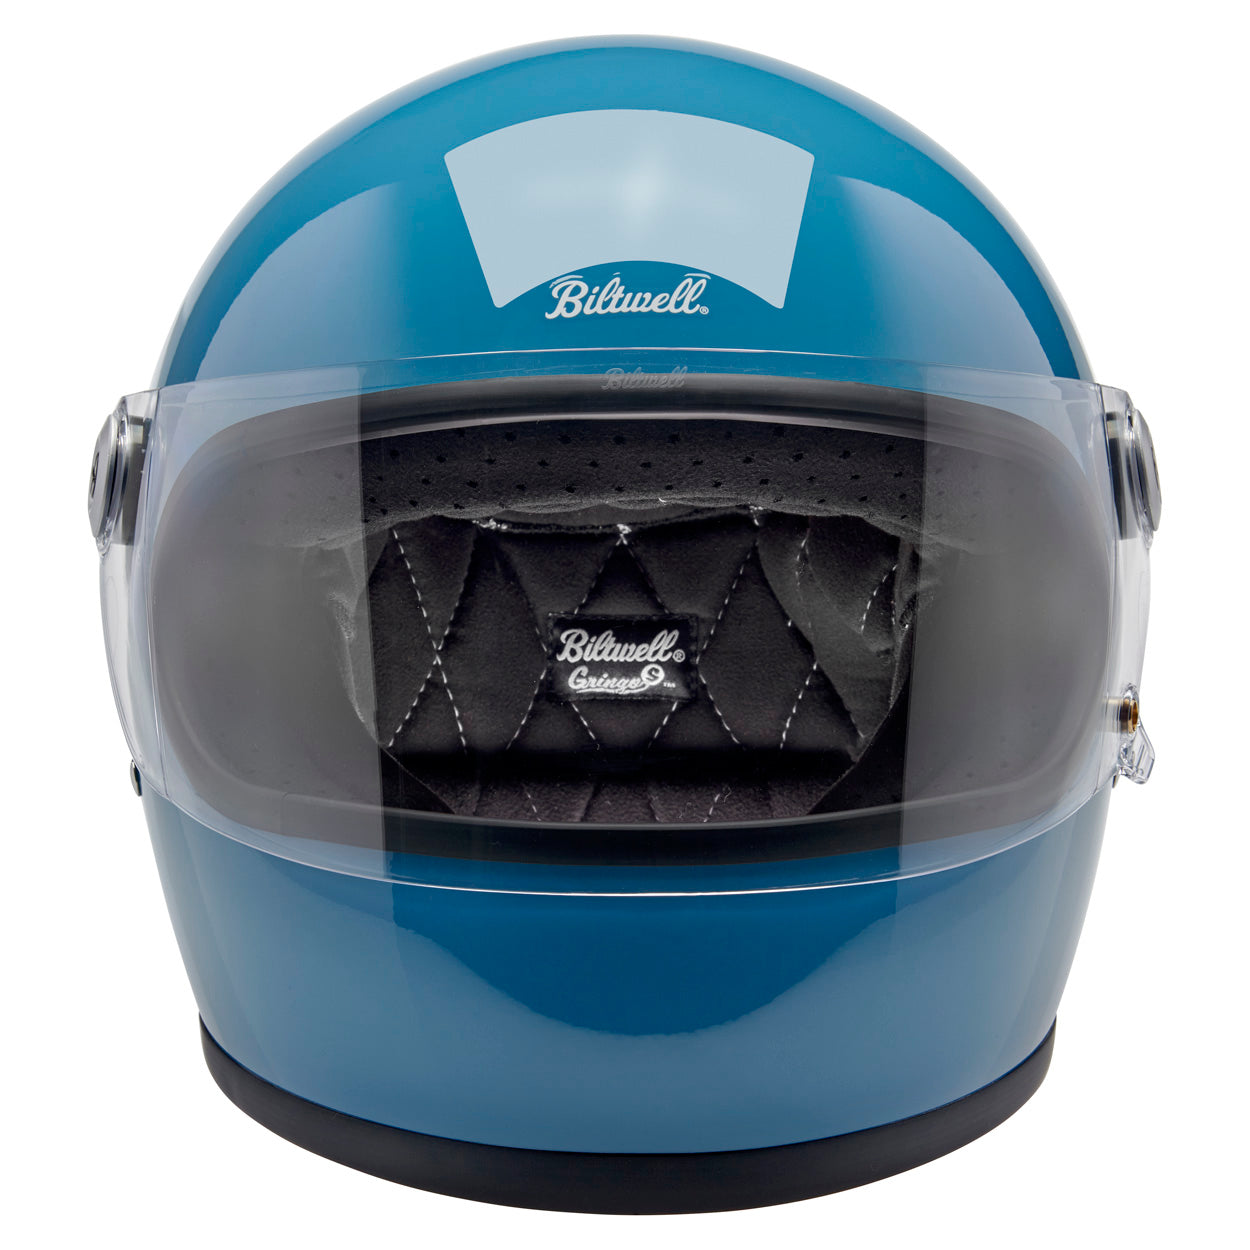 Gringo S ECE R22.06 Helmet - Dove Blue